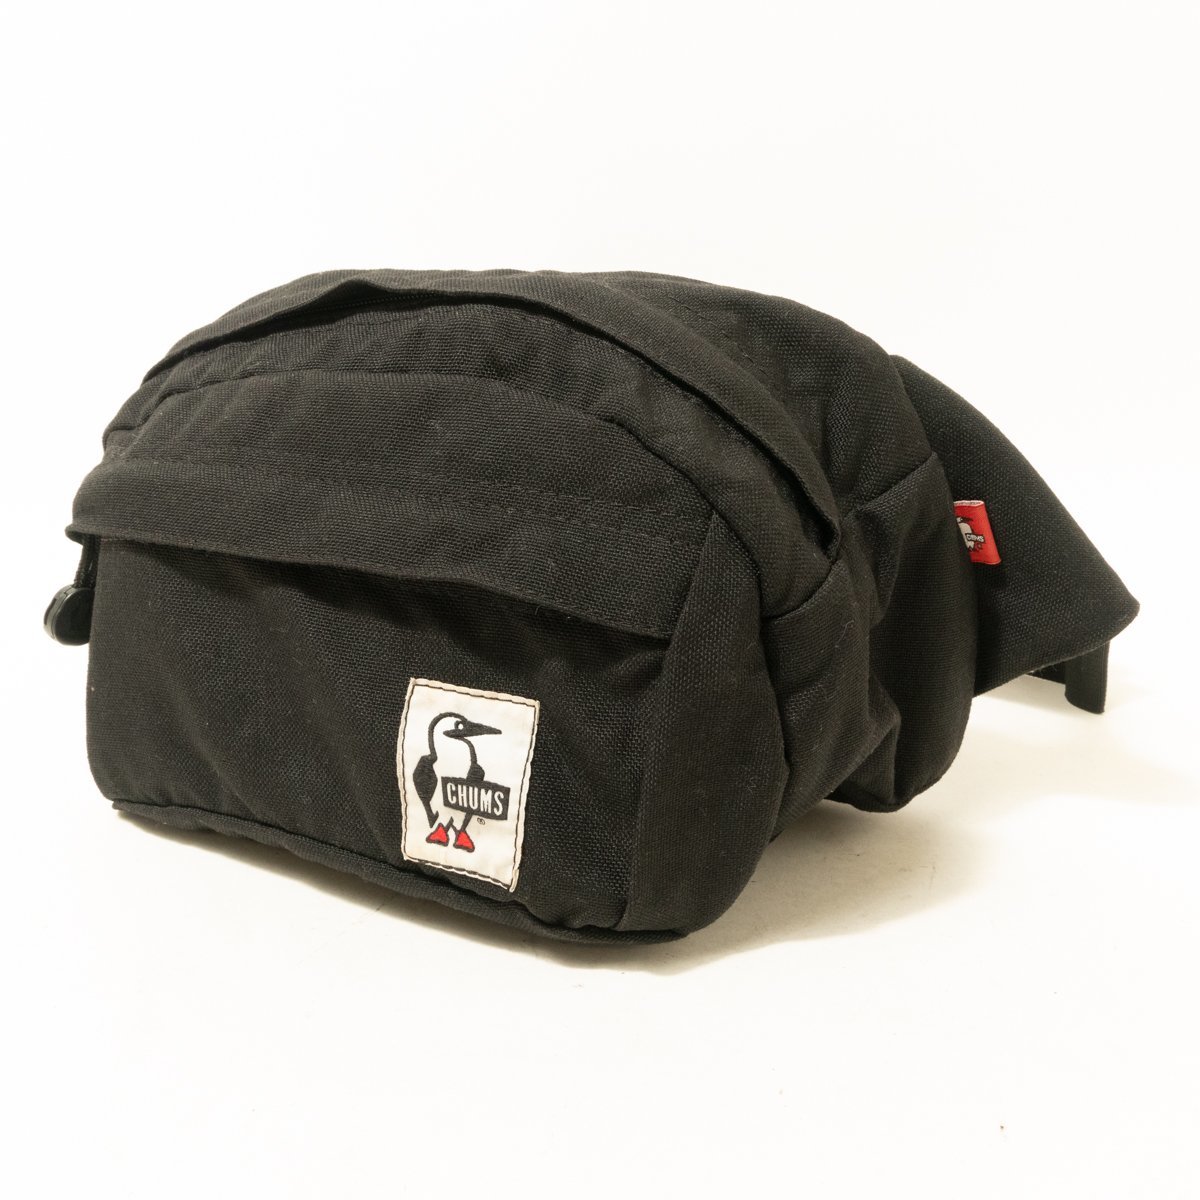 CHUMS Chums body bag black black nylon unisex man and woman use diagonal .. simple casual all season outdoor bag